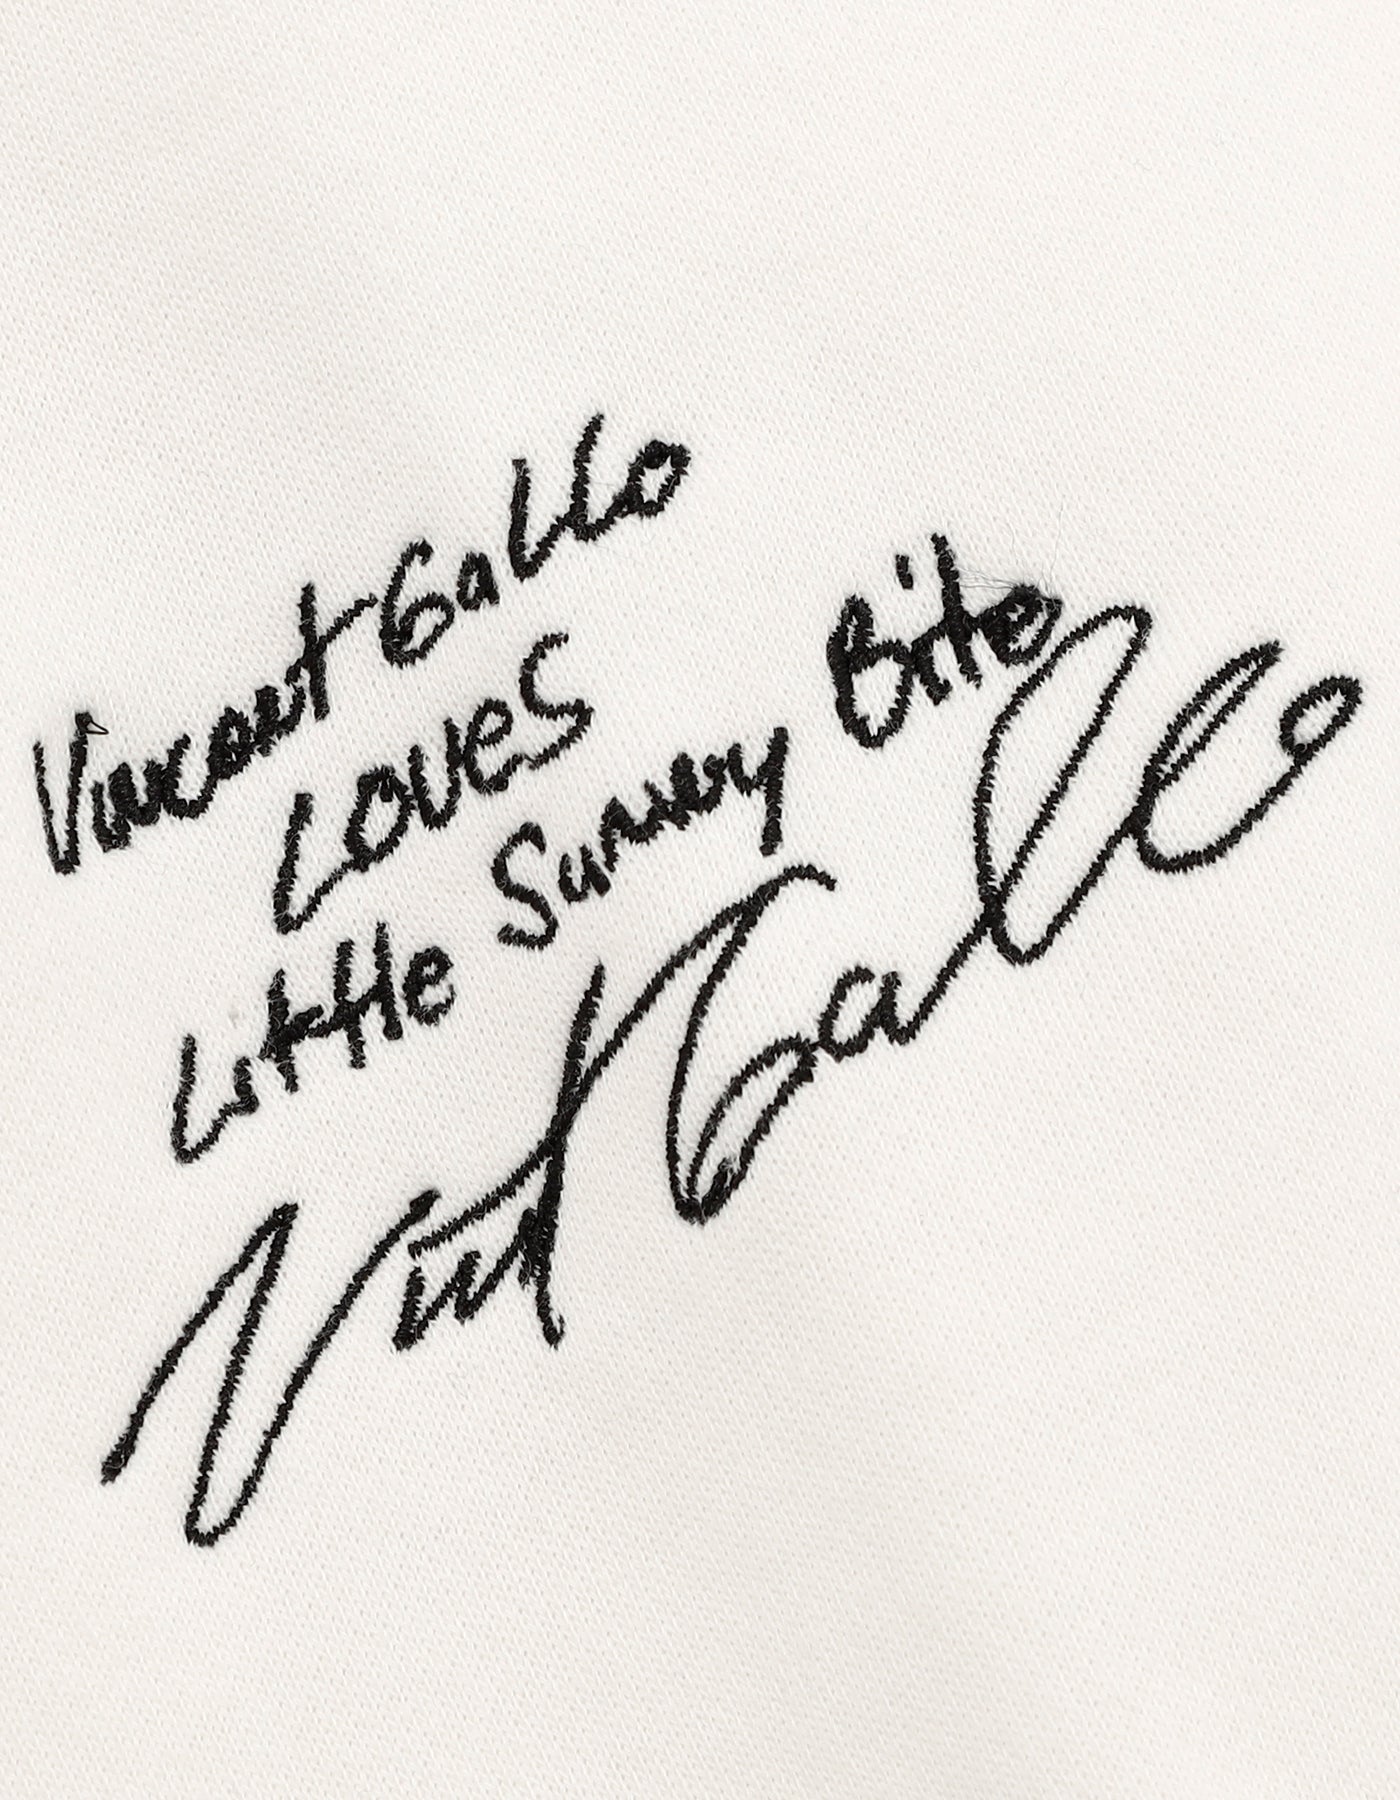 Vincent Gallo x little sunny bite photo hoodie / WHITE